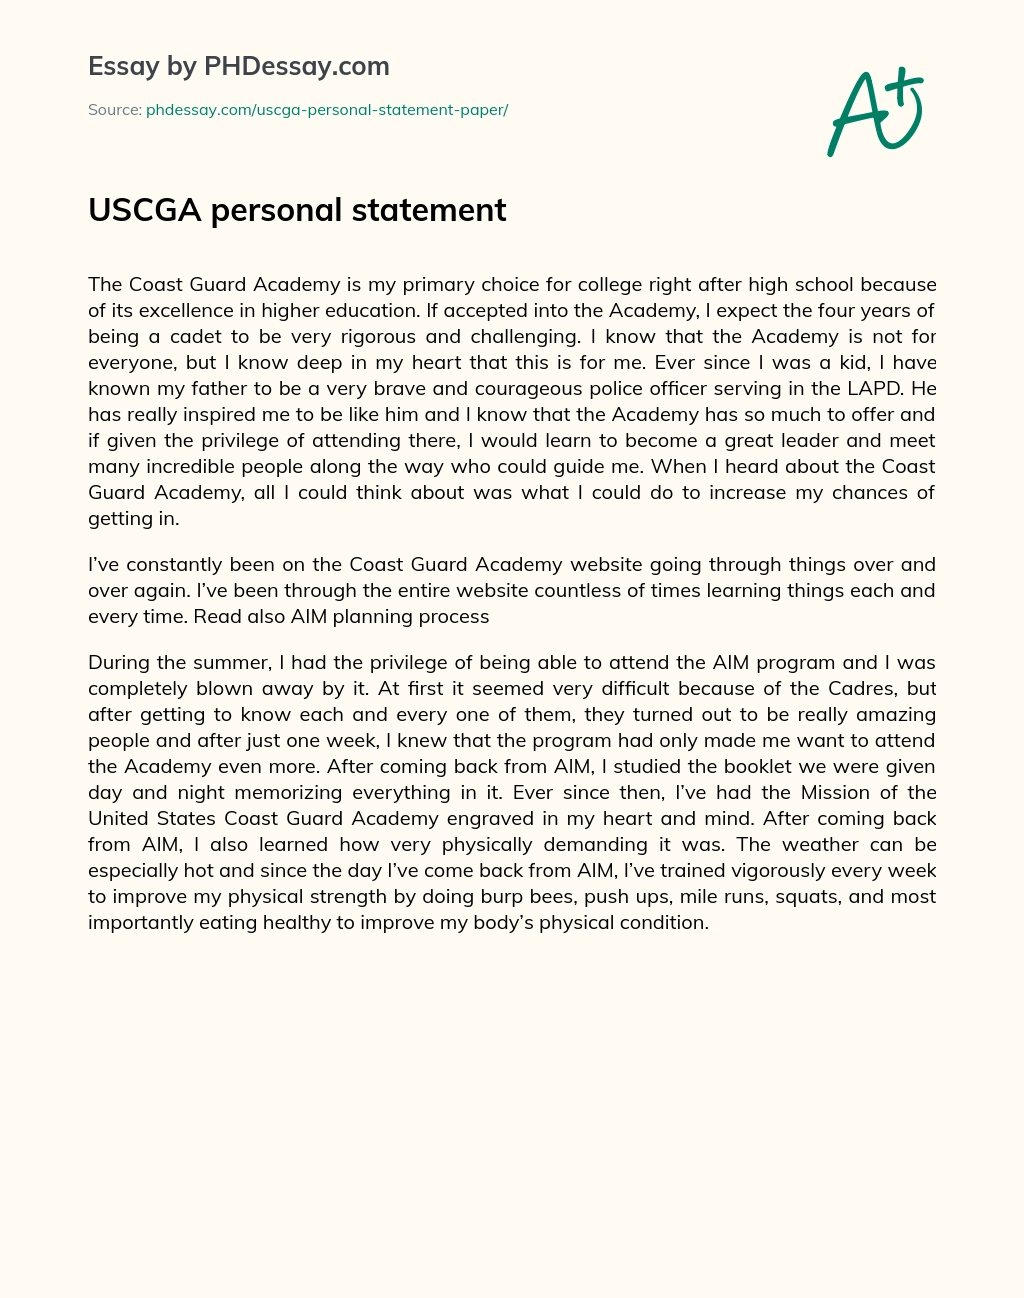 USCGA Personal Statement essay